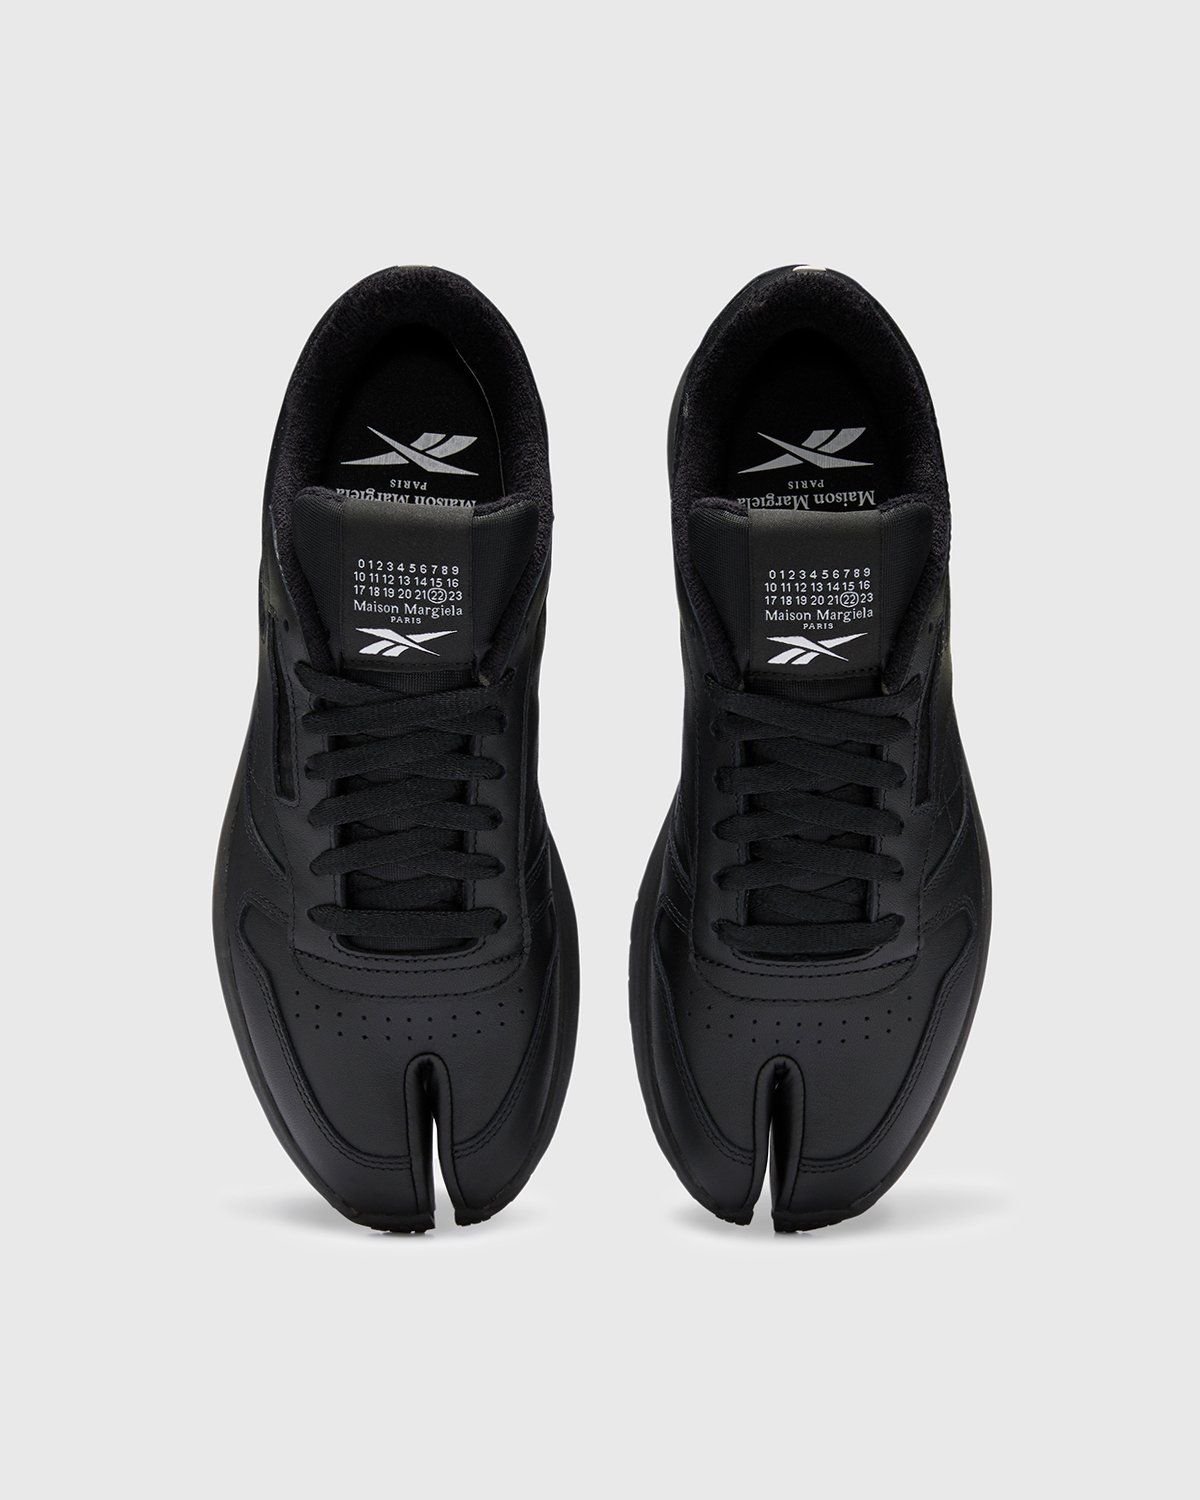 Maison Margiela x Reebok – Classic Leather Tabi Black - Low Top Sneakers - Black - Image 7